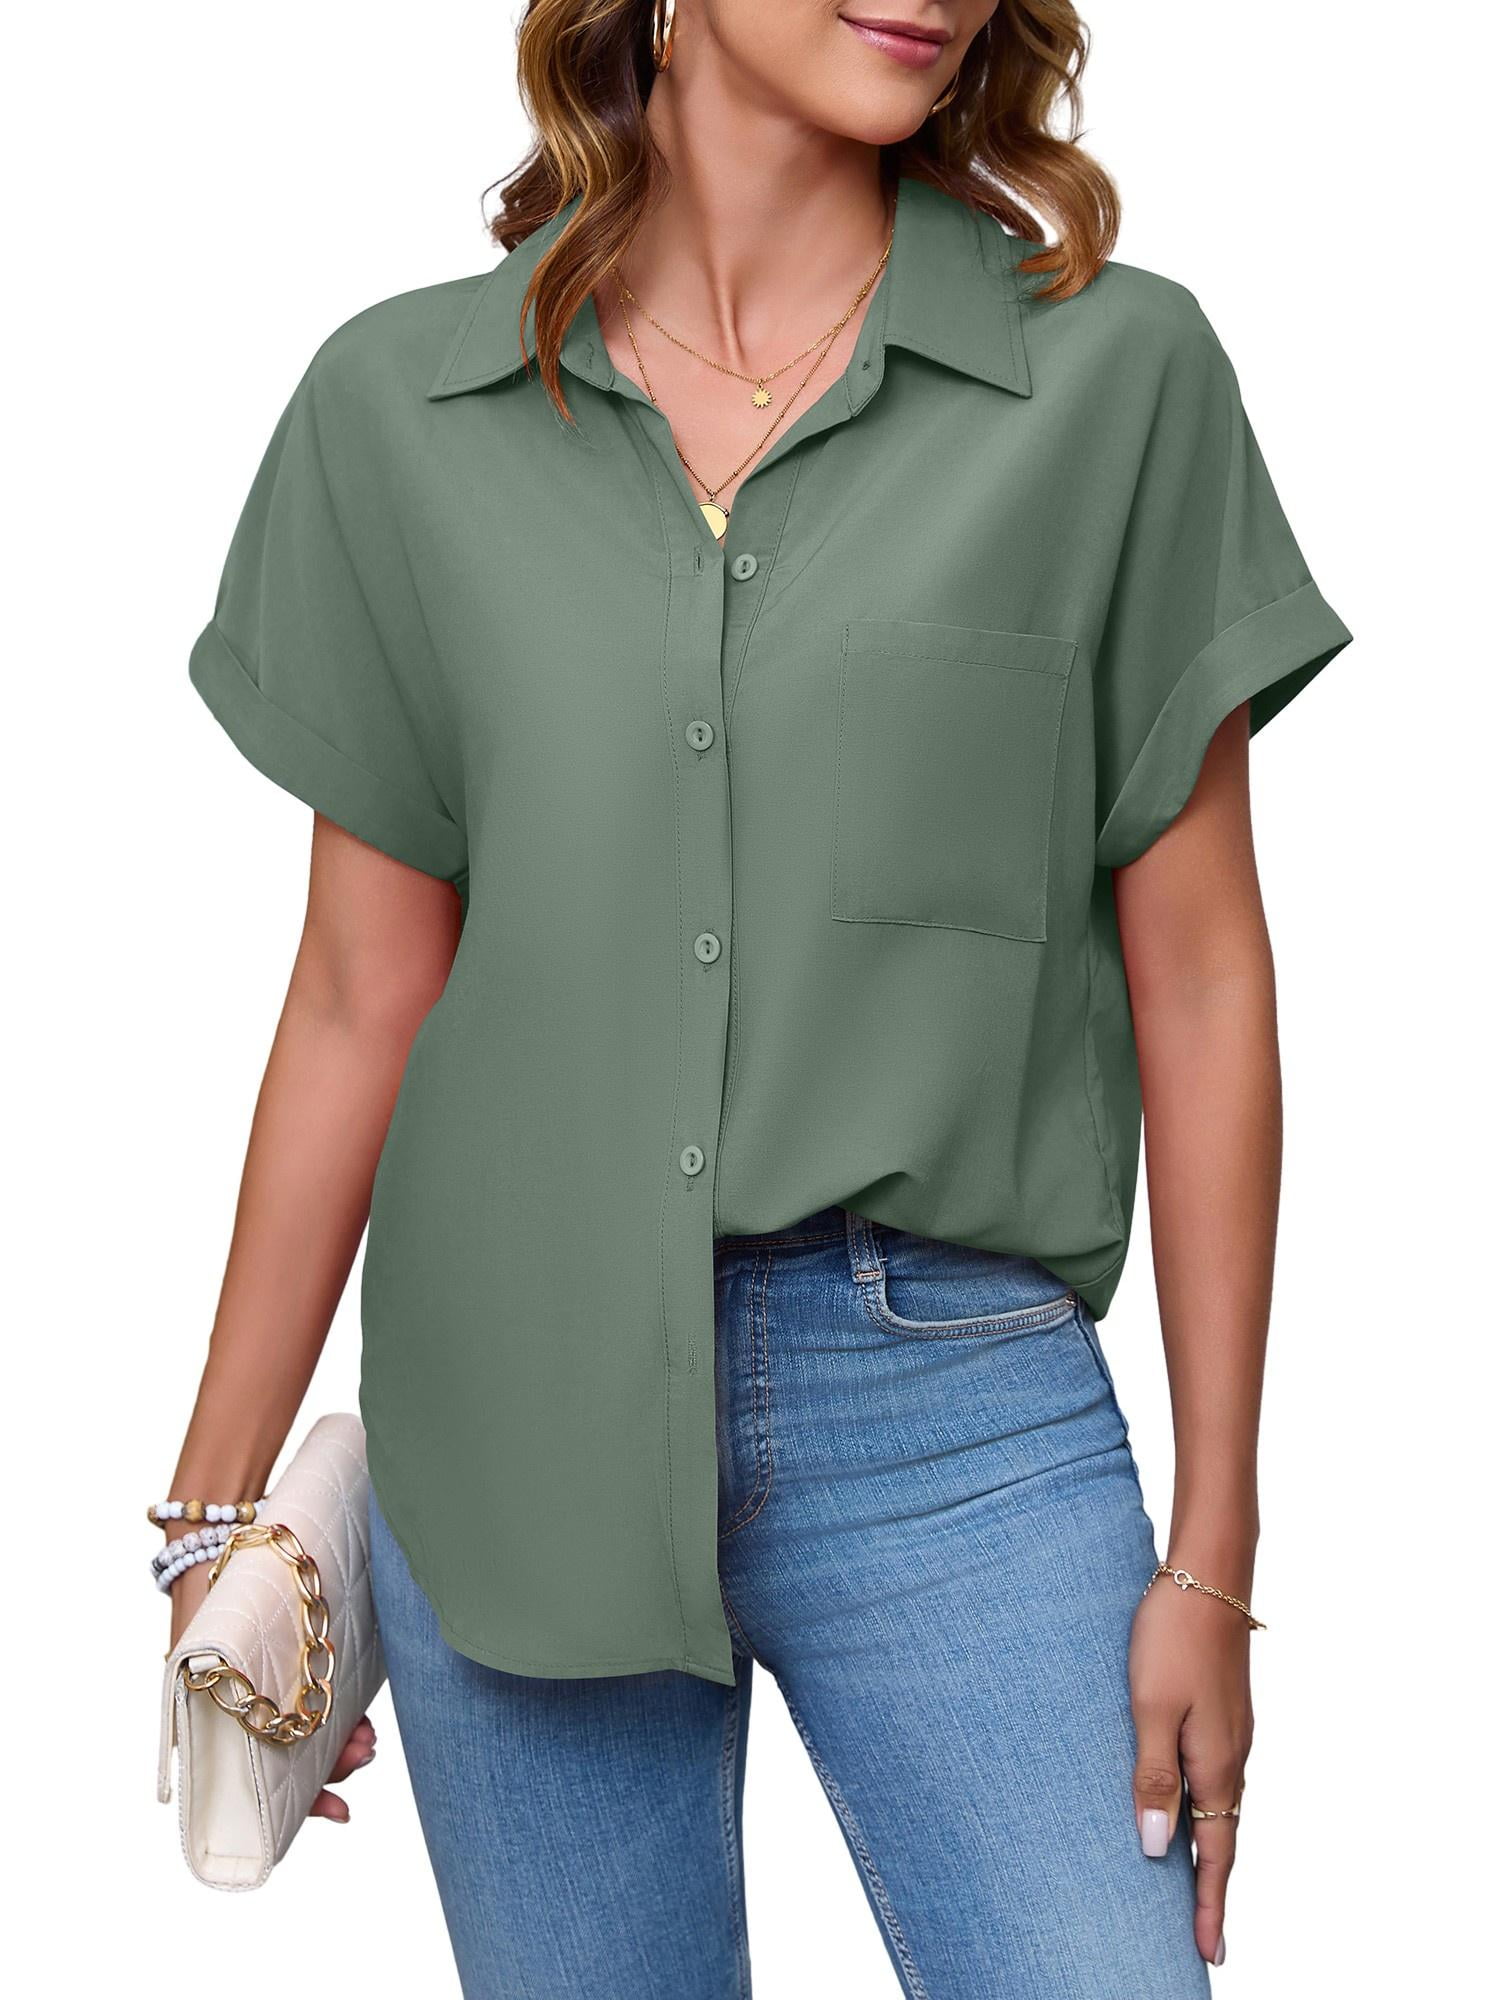 XMMSWDLA Mens Short Sleeve Shirts Button Down Tops Fishing Tees Spread  Collar Plain Summer Blouses Green Mens Shirts 